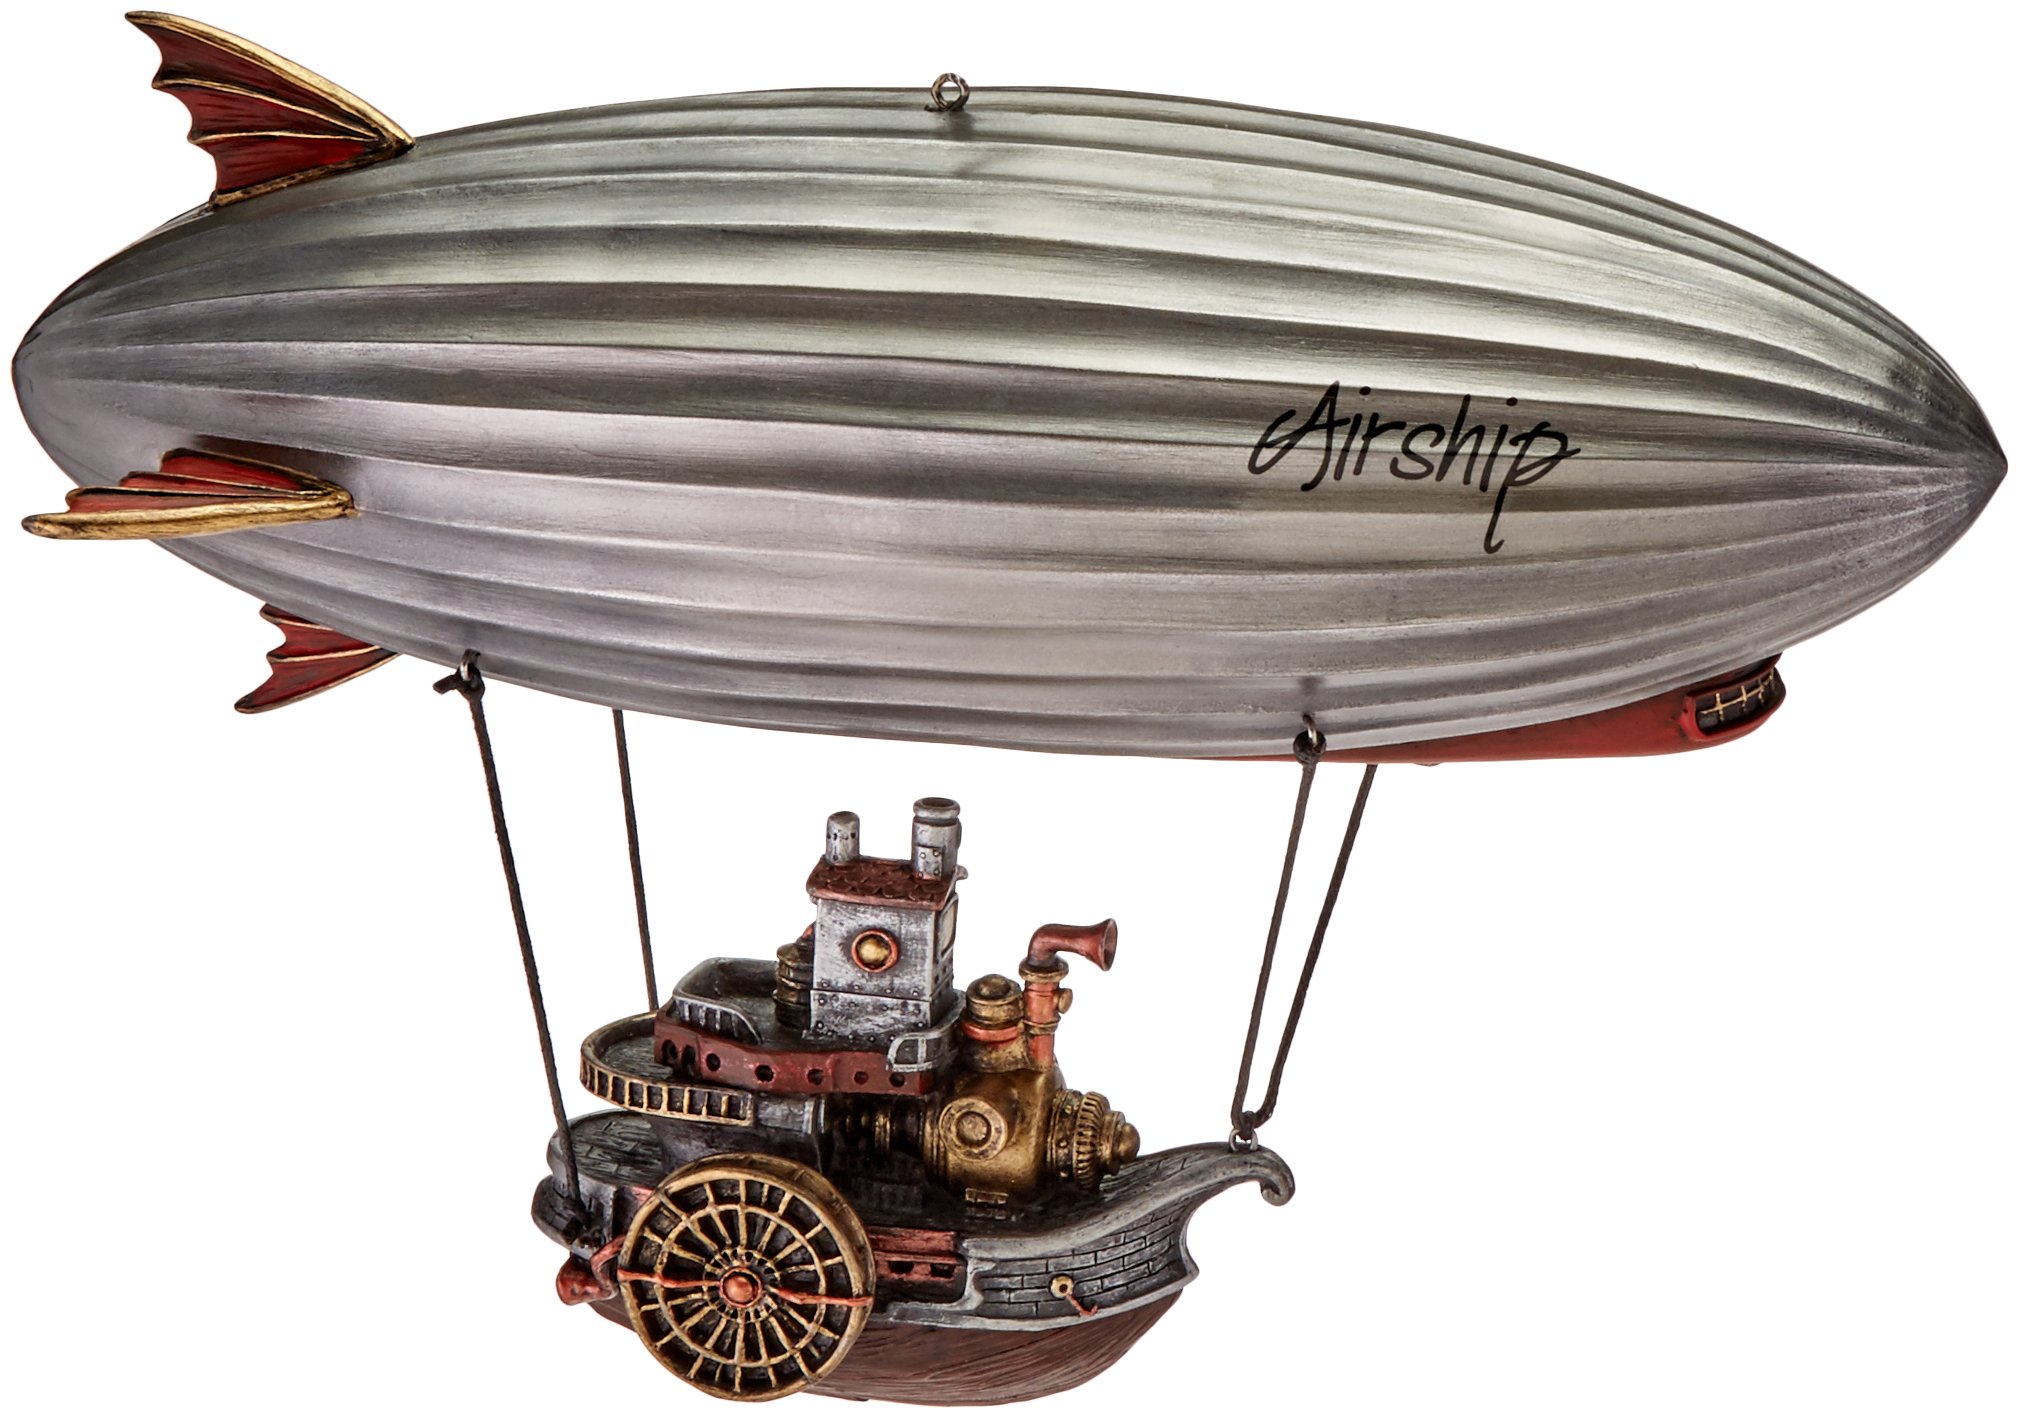 11" Steampunk Airship With Steamship Gondola Home Decor Statue Fantasy Figure